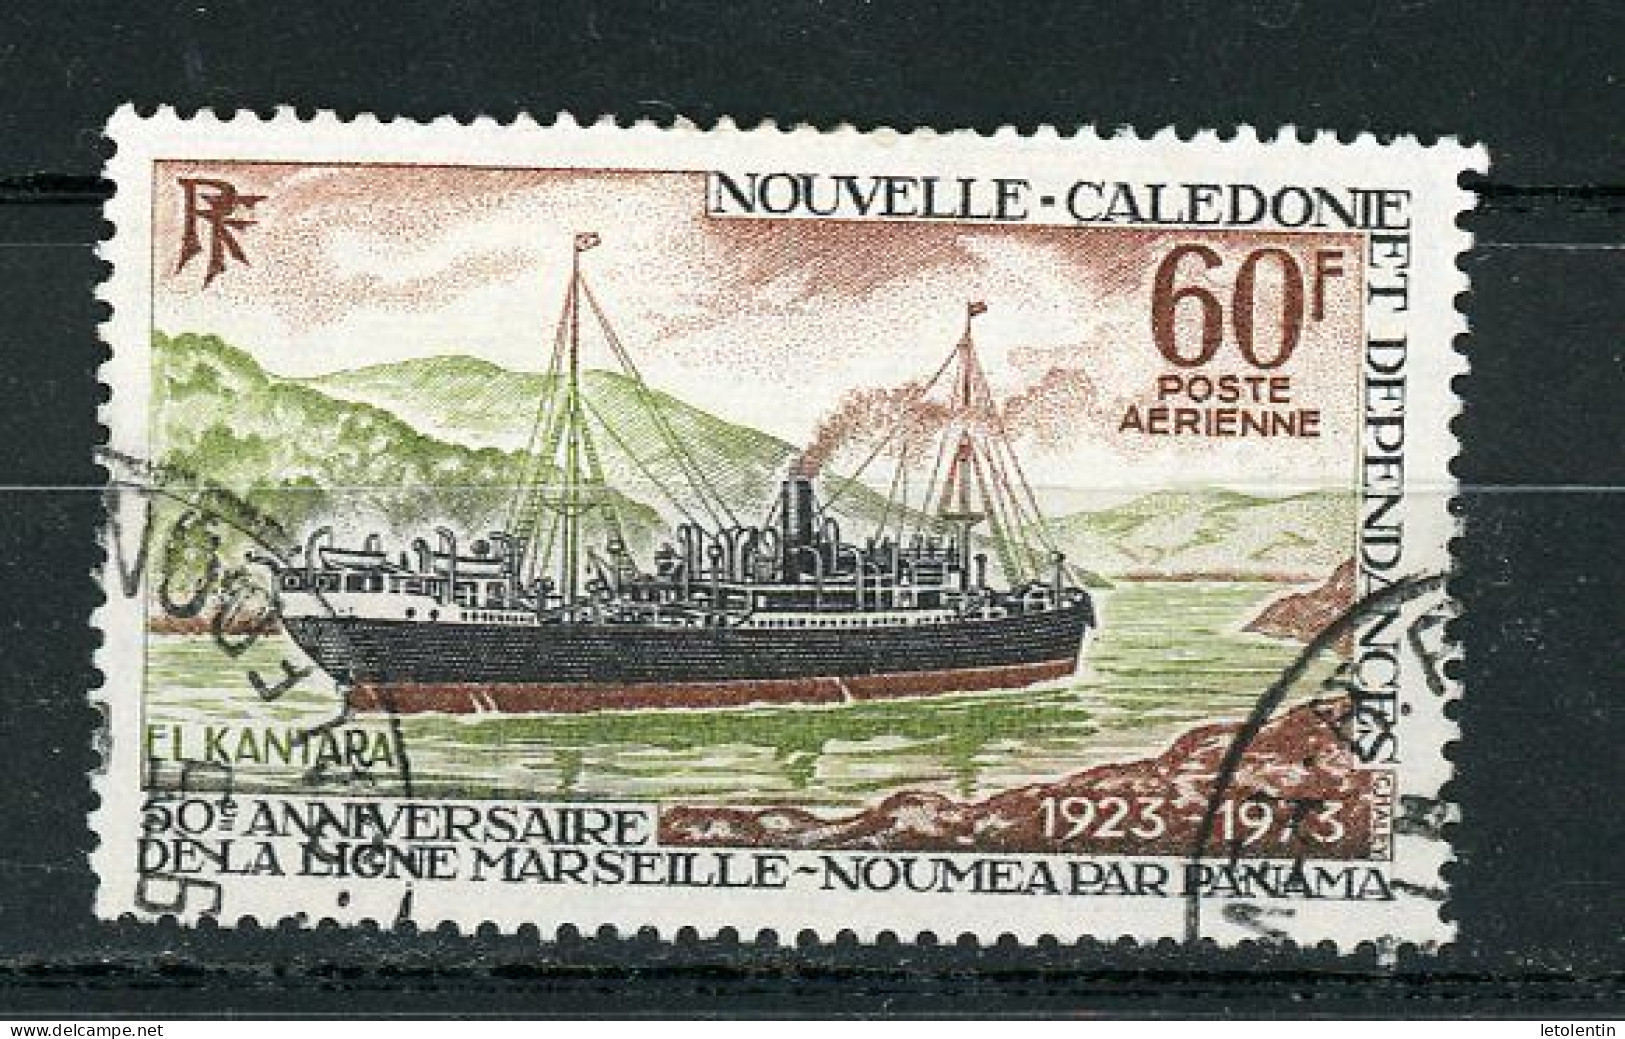 NOUVELLE-CALEDONIE RF - PAQUEBOT "EL KANTARA" - P.A. - N°Yt 141 Obli. - Used Stamps